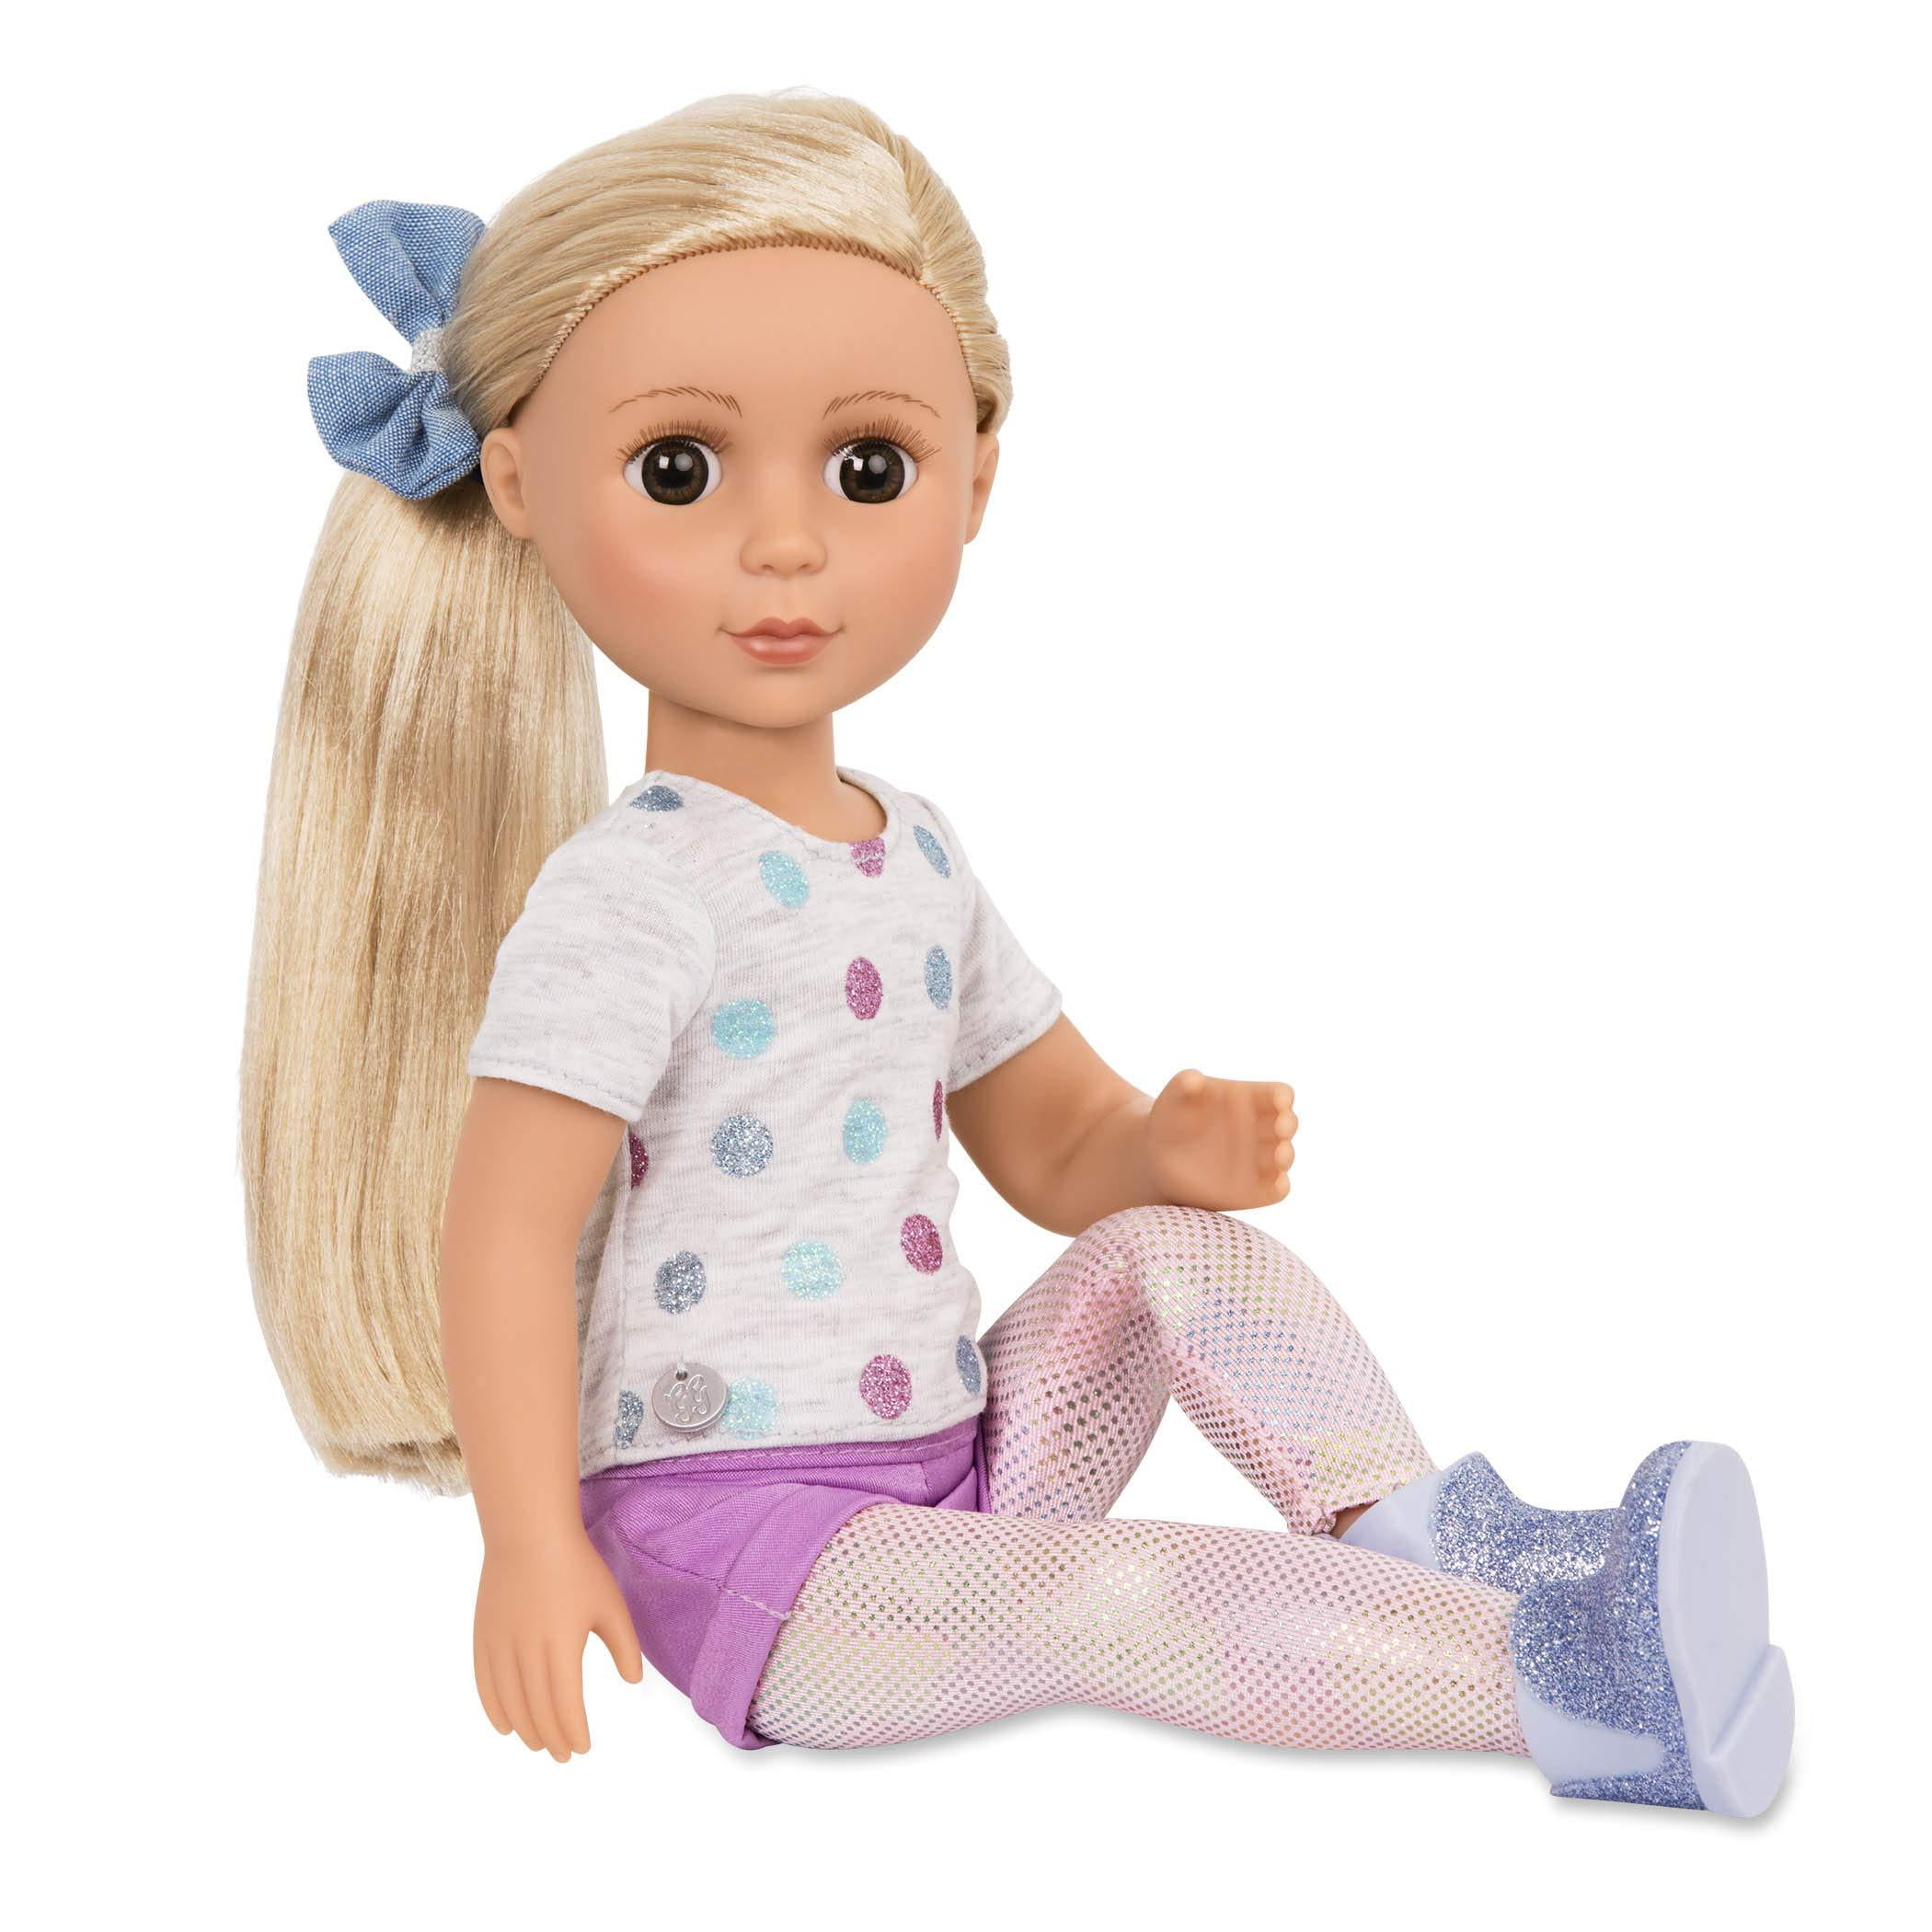 Glitter Girls Dolls - Alfie 14-inch Poseable Cheerleader Doll - Brown